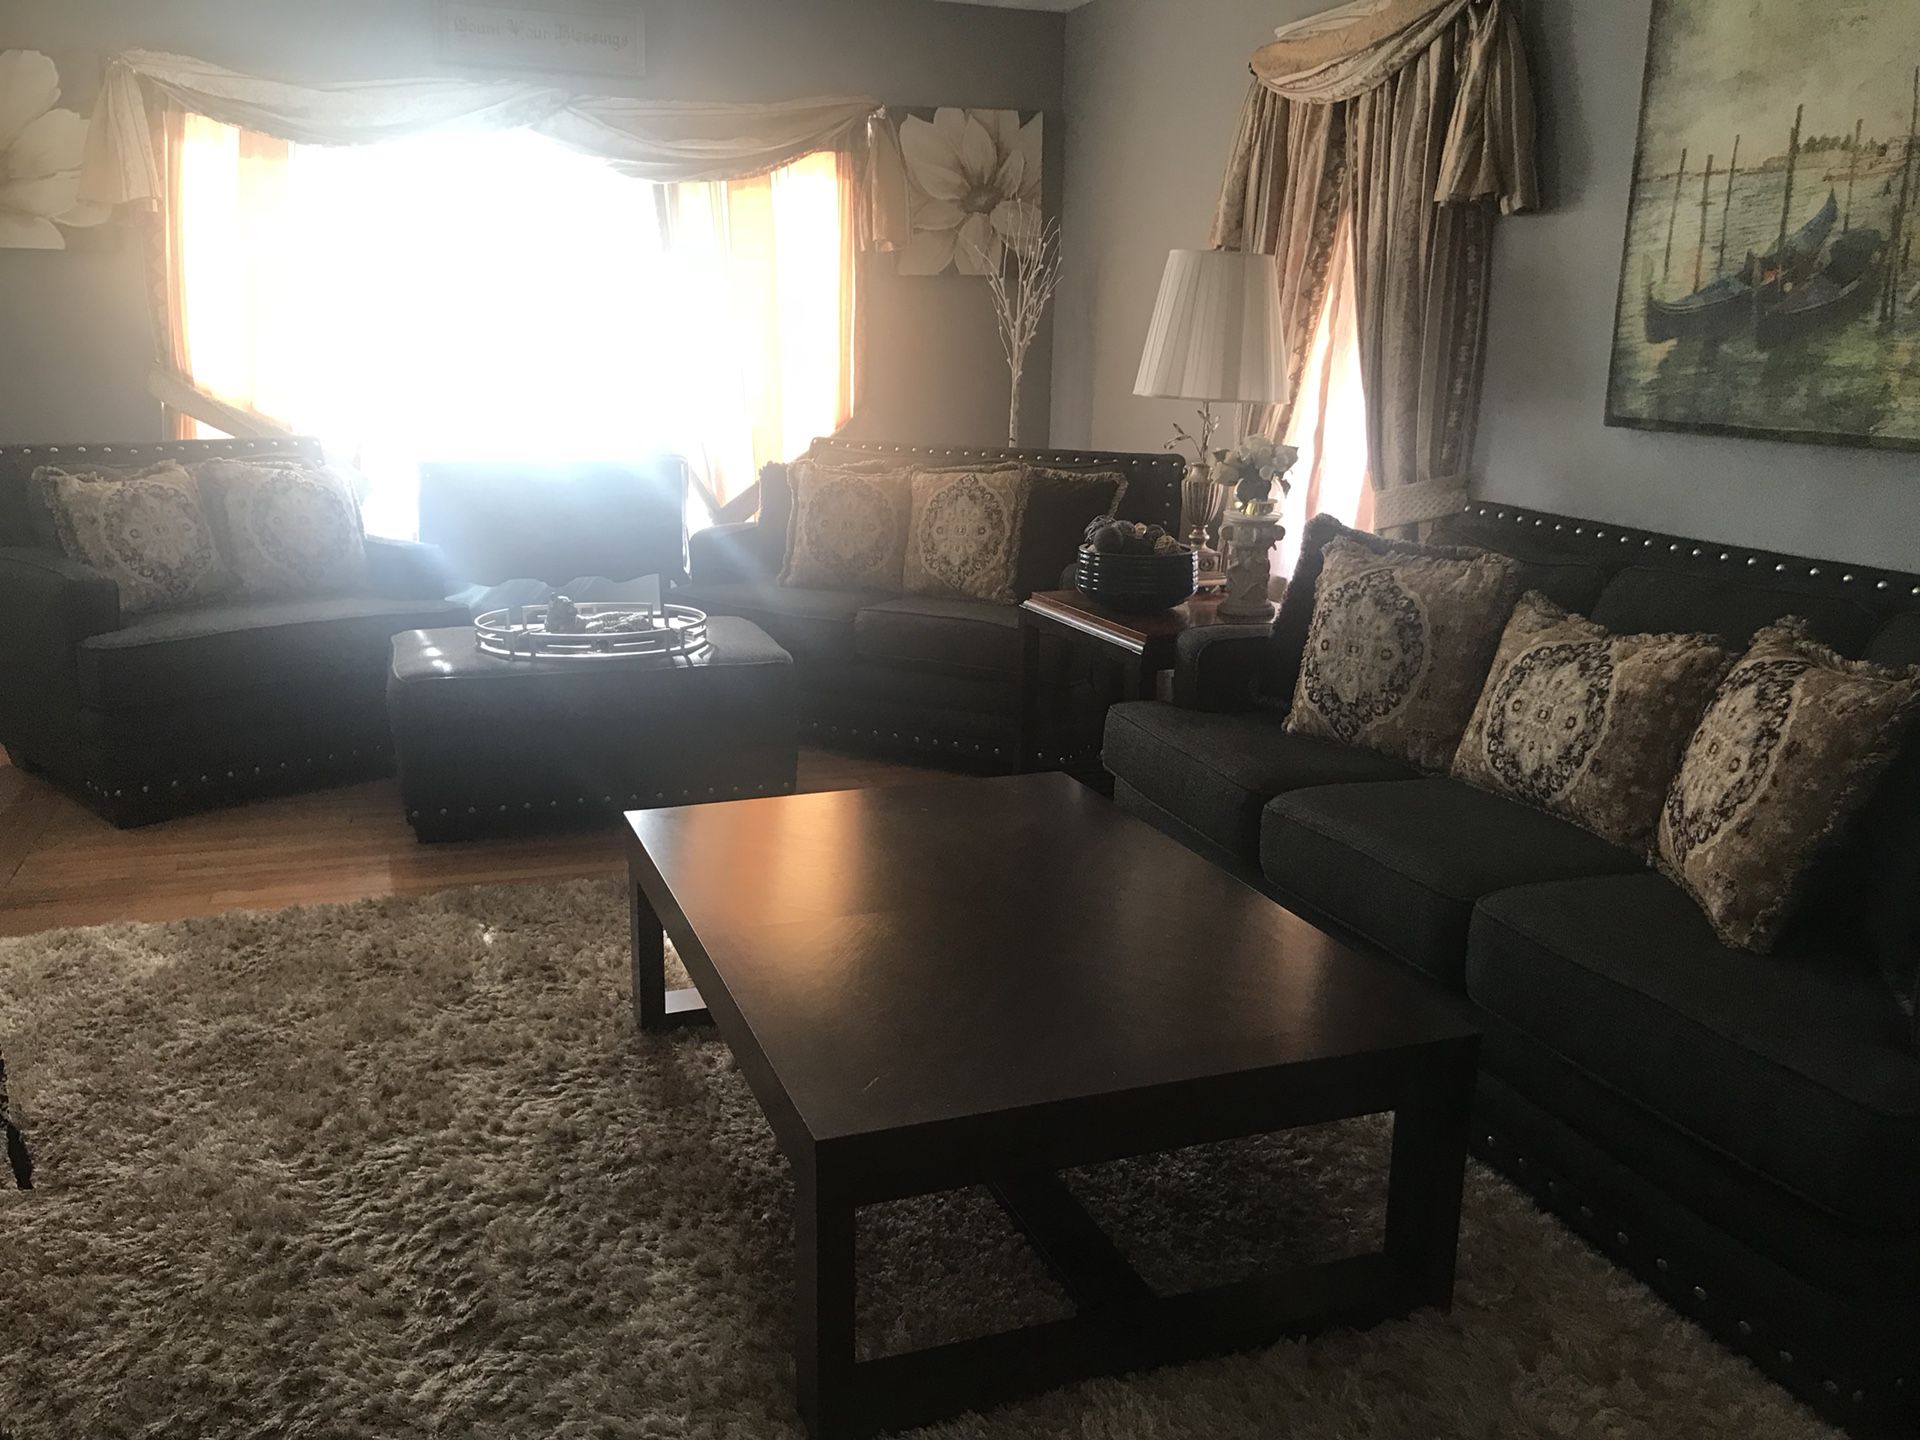 Complete living room set Sofa/Loveseat/Chair/Storage Ottoman